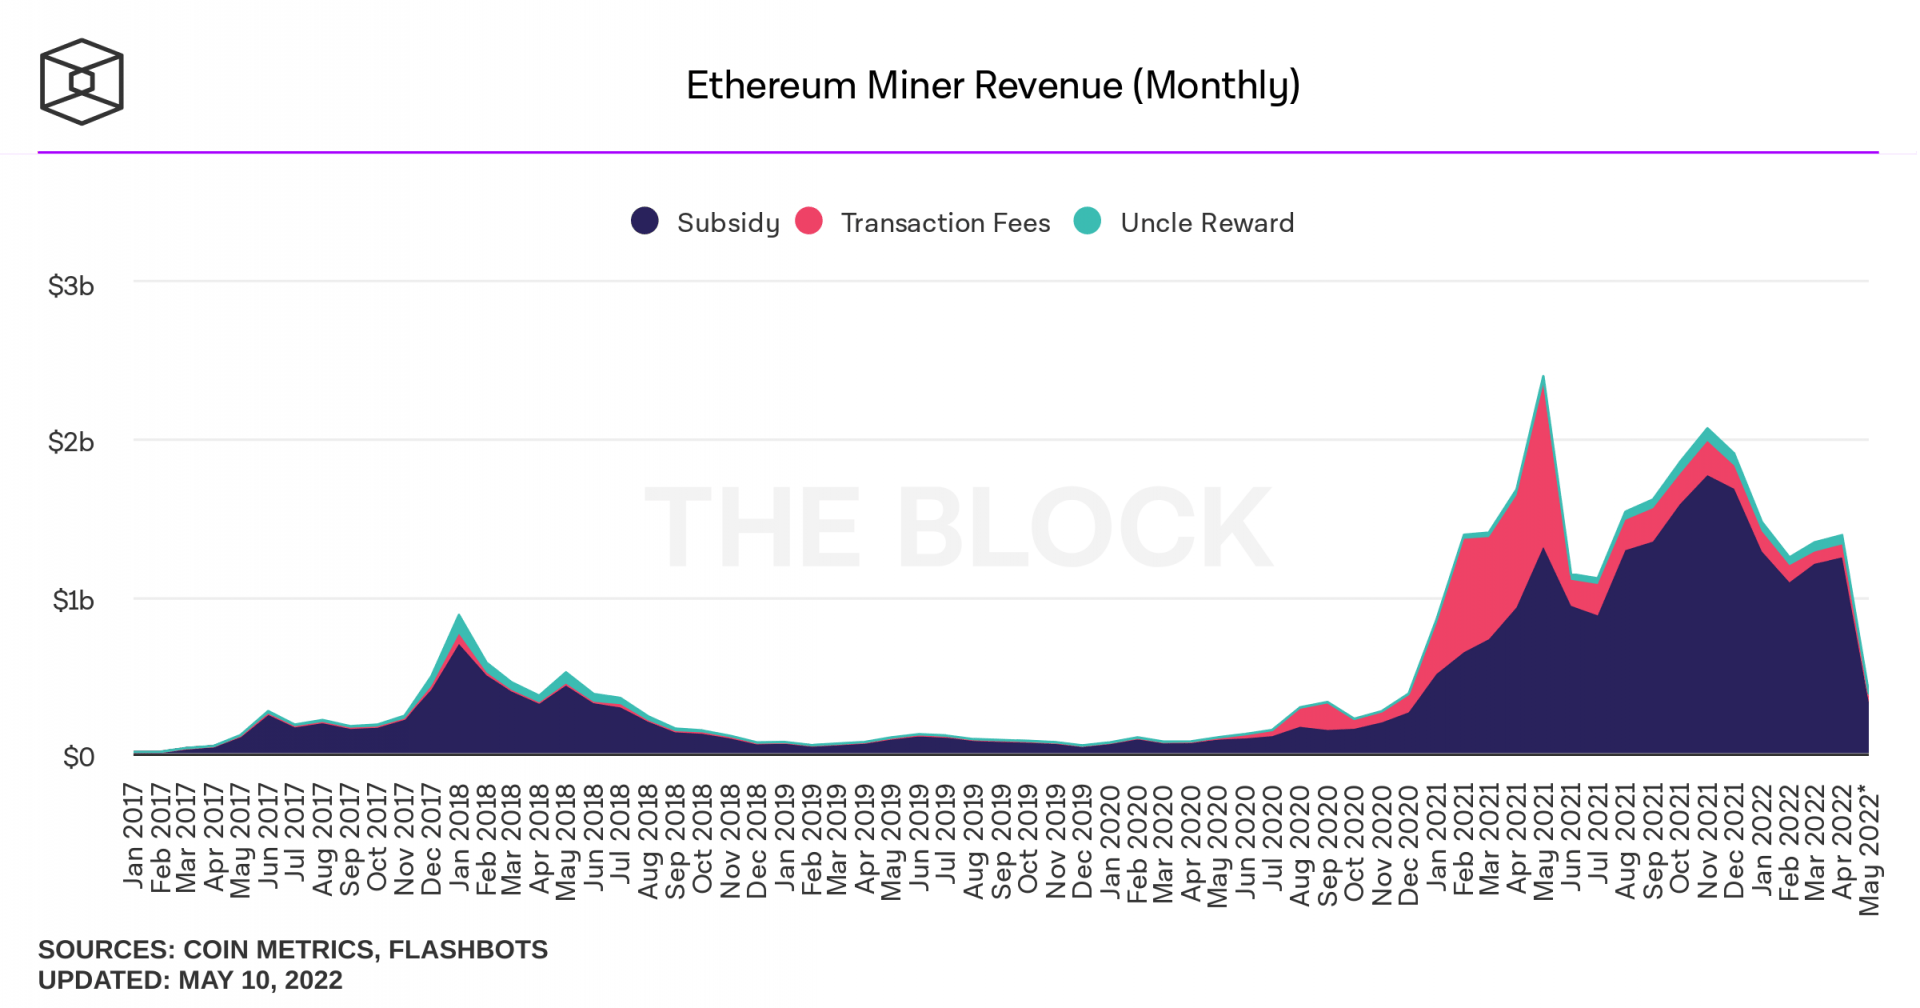 Ethereum mining revenues amount to $1.25 billion in April 2022.